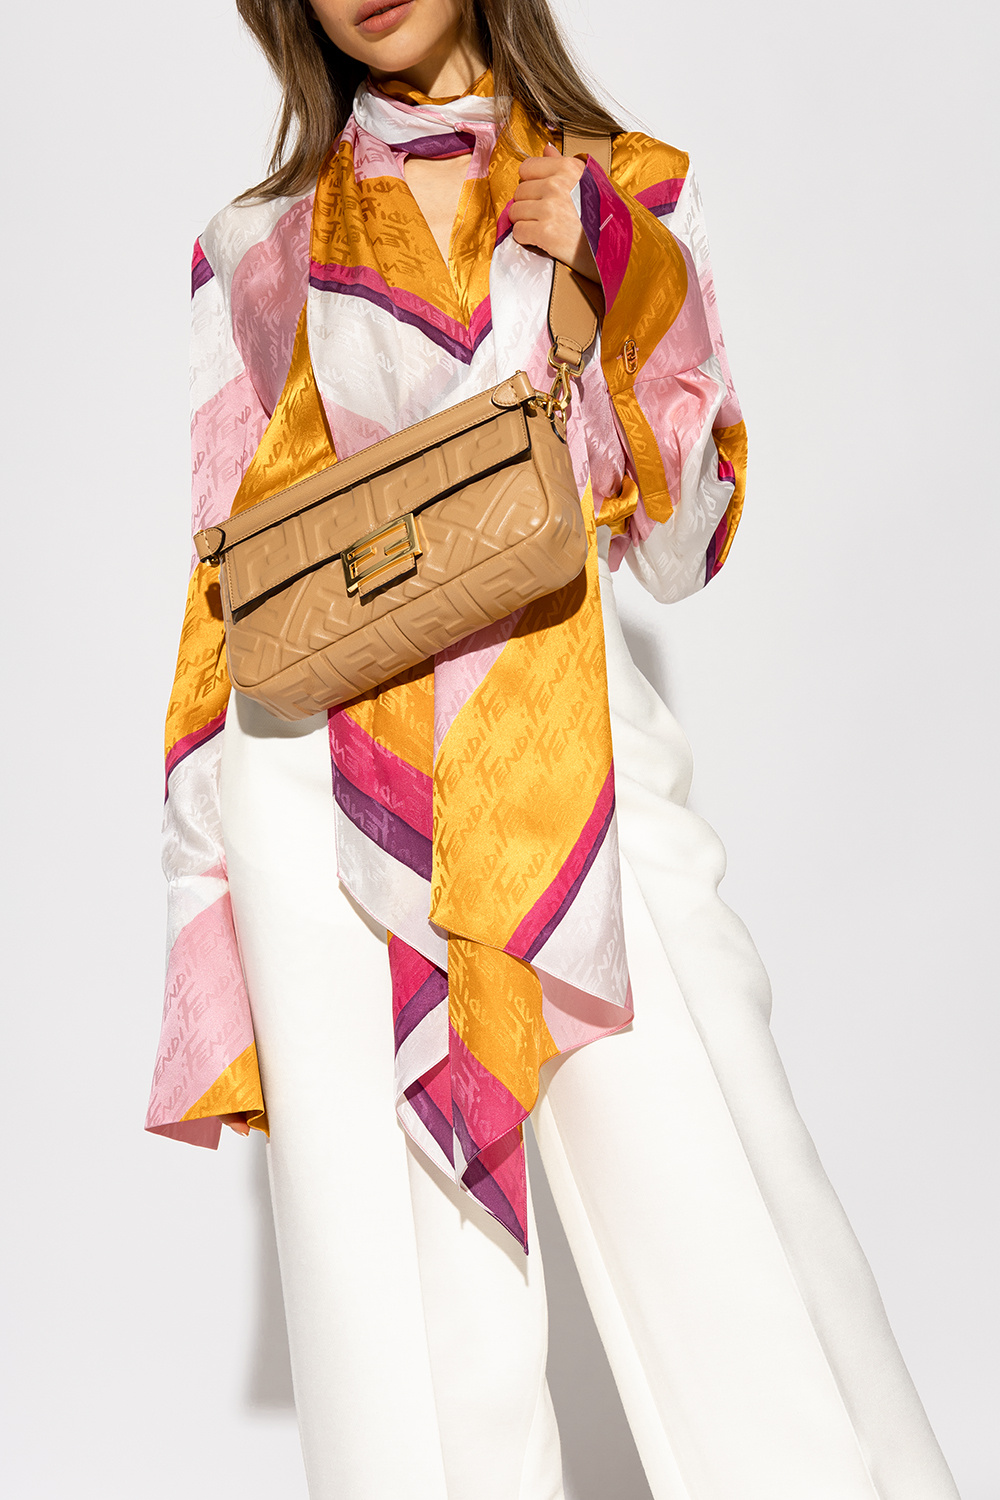 fendi contrasting-panel ’Baguette Medium’ shoulder bag